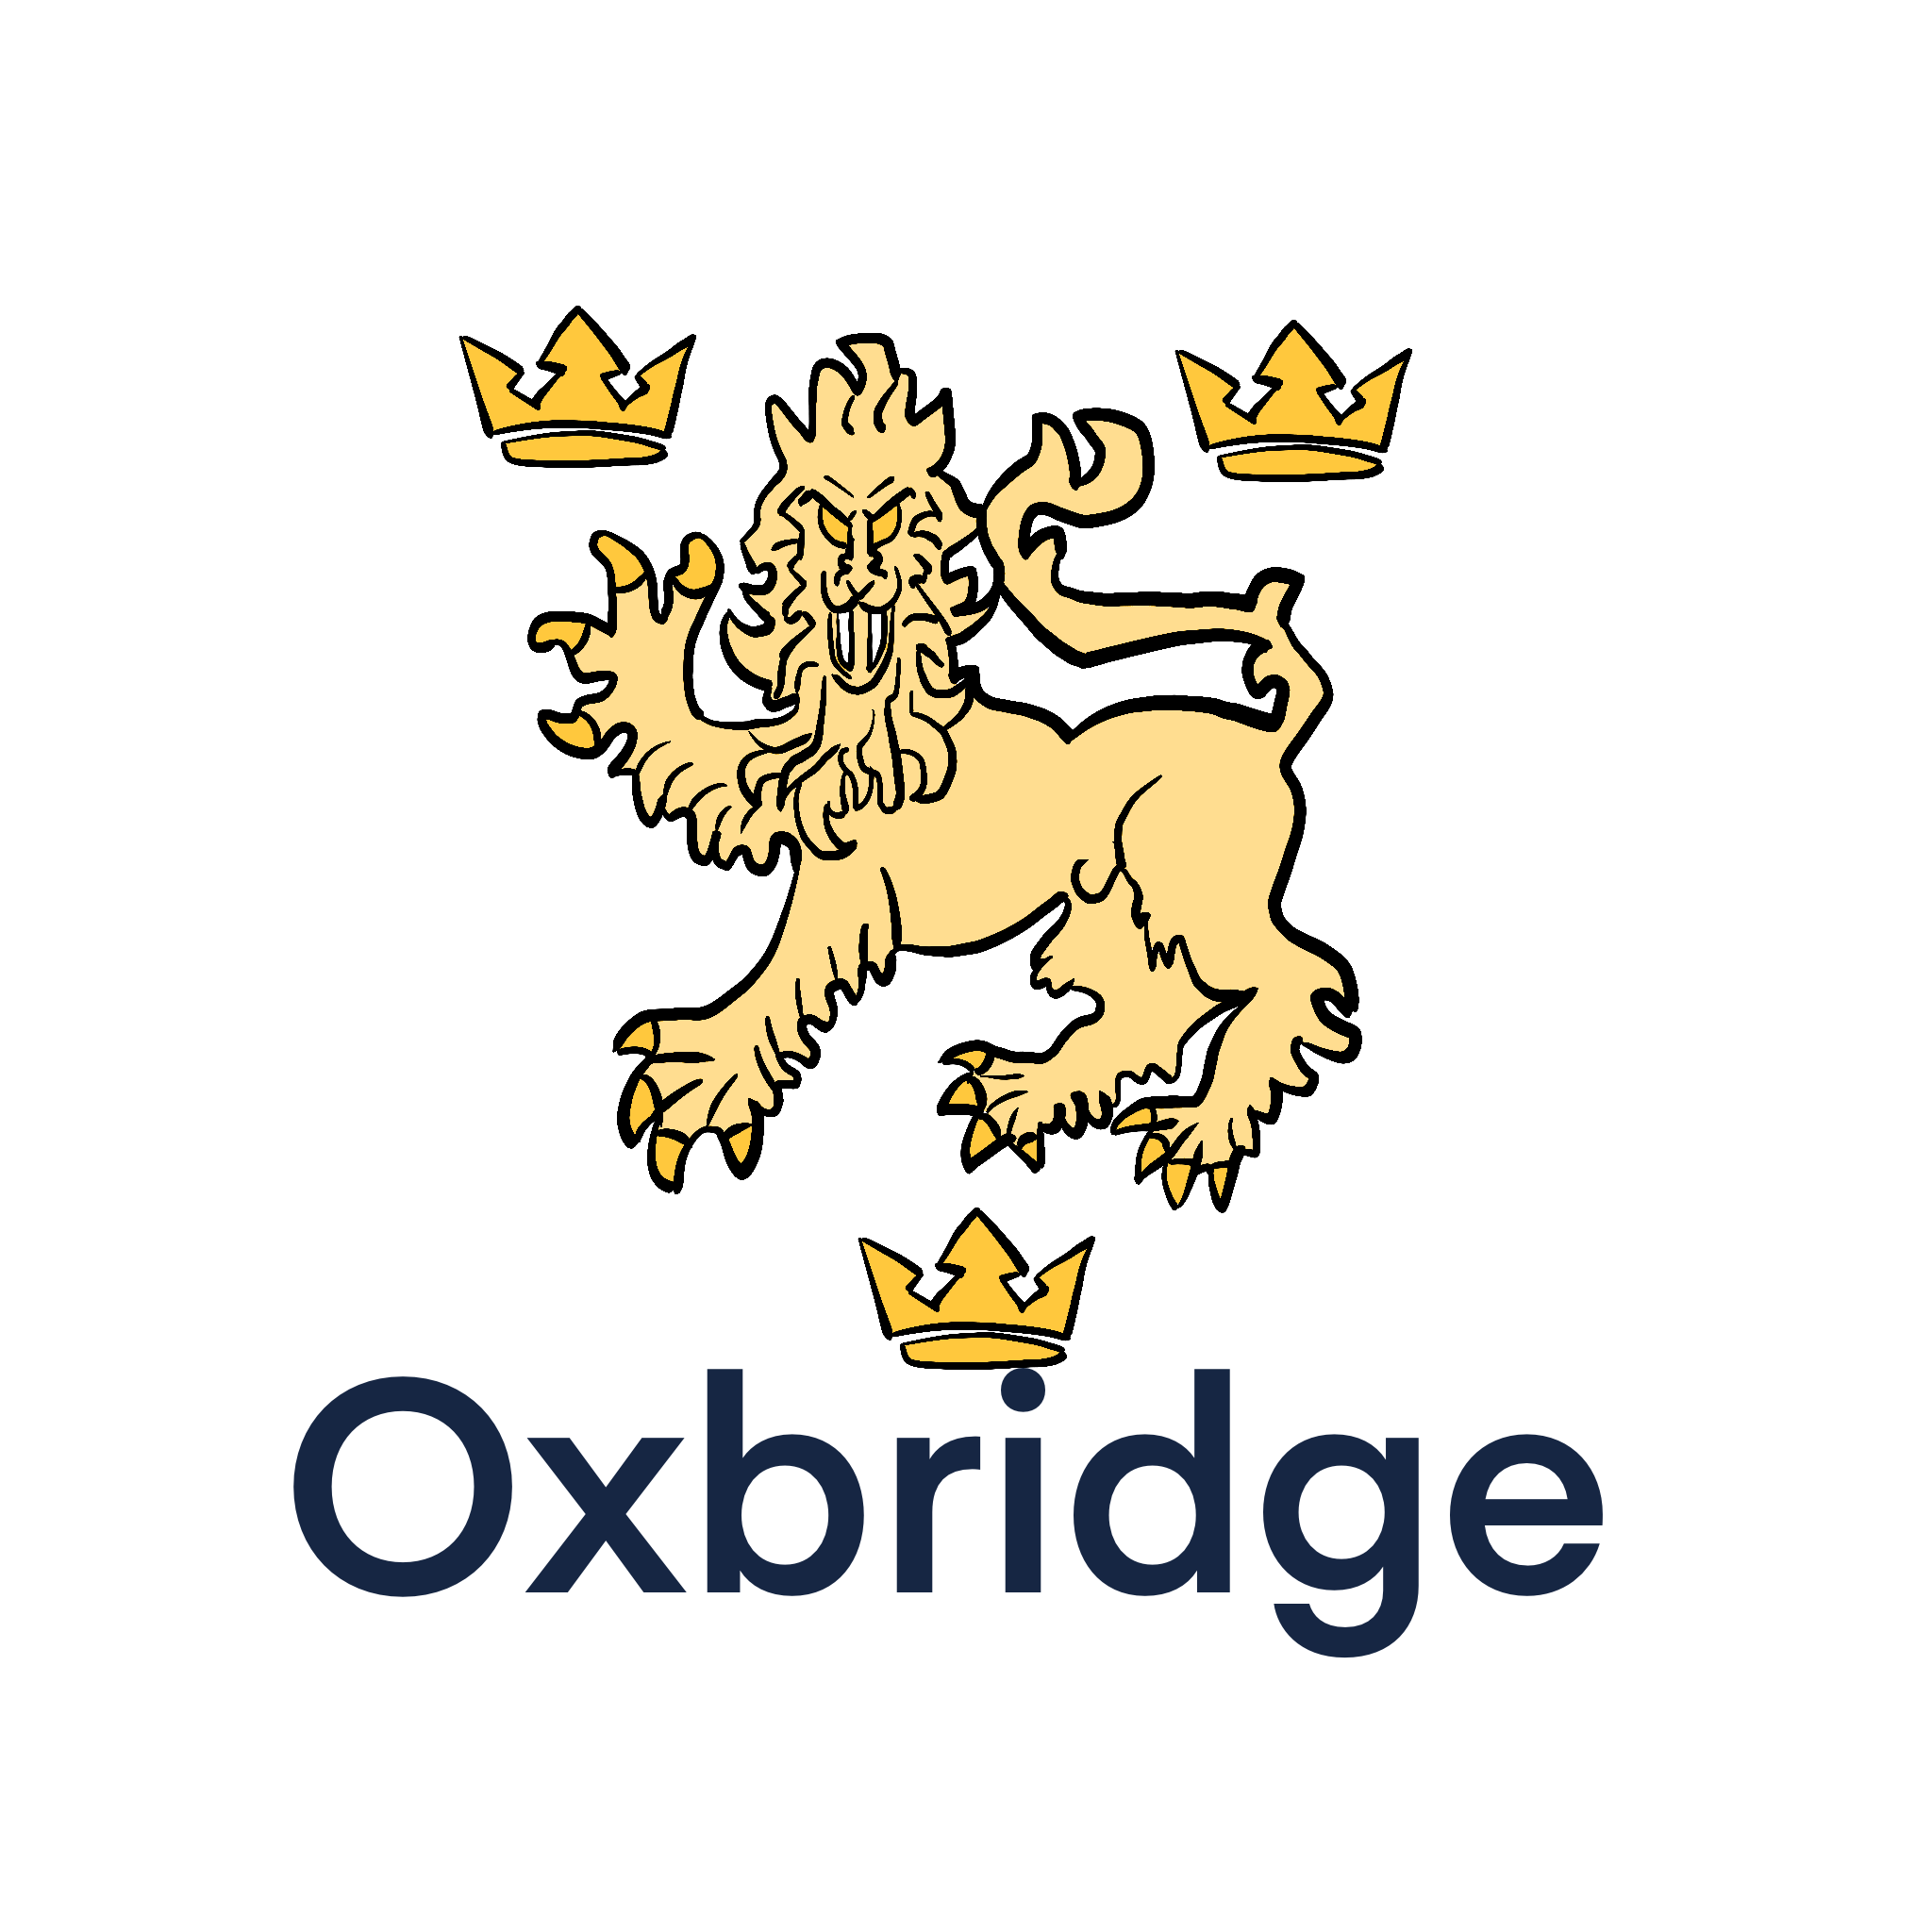 Isobel holds a degree from Oxbridge